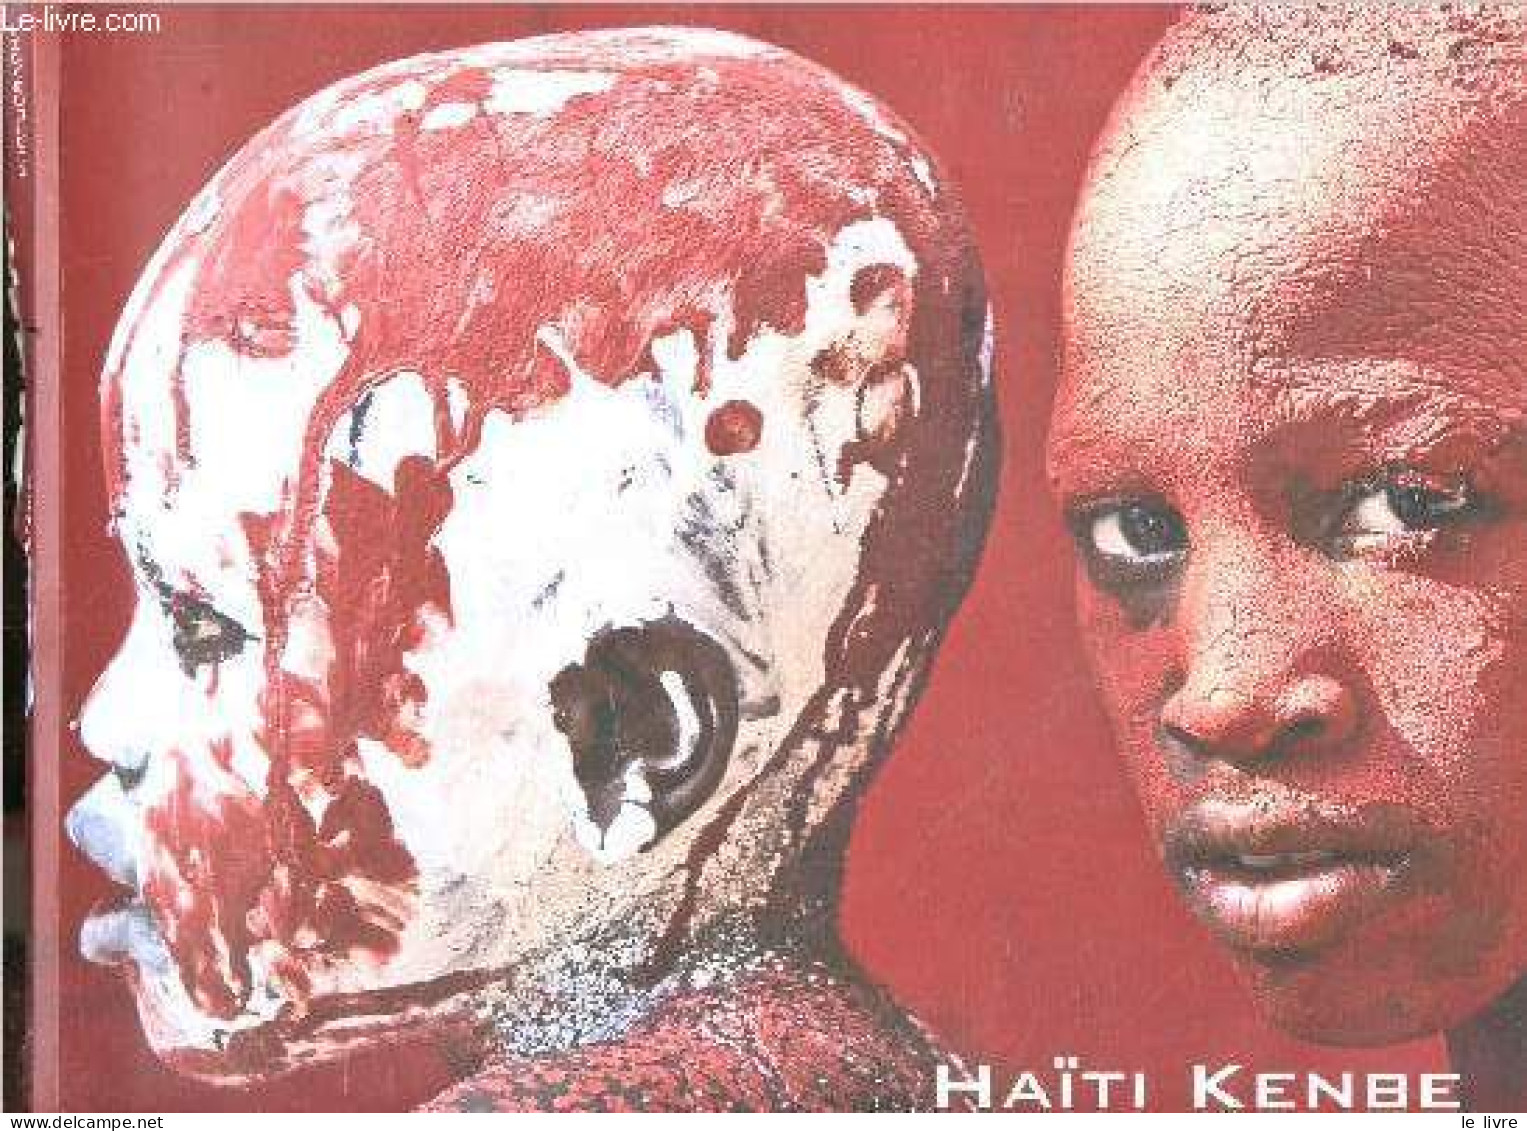 Haiti Kenbe - Ayiti, Kenbe Pa Lage ! - Benjamin - Jacques Martin Philippson - 2010 - Photographs